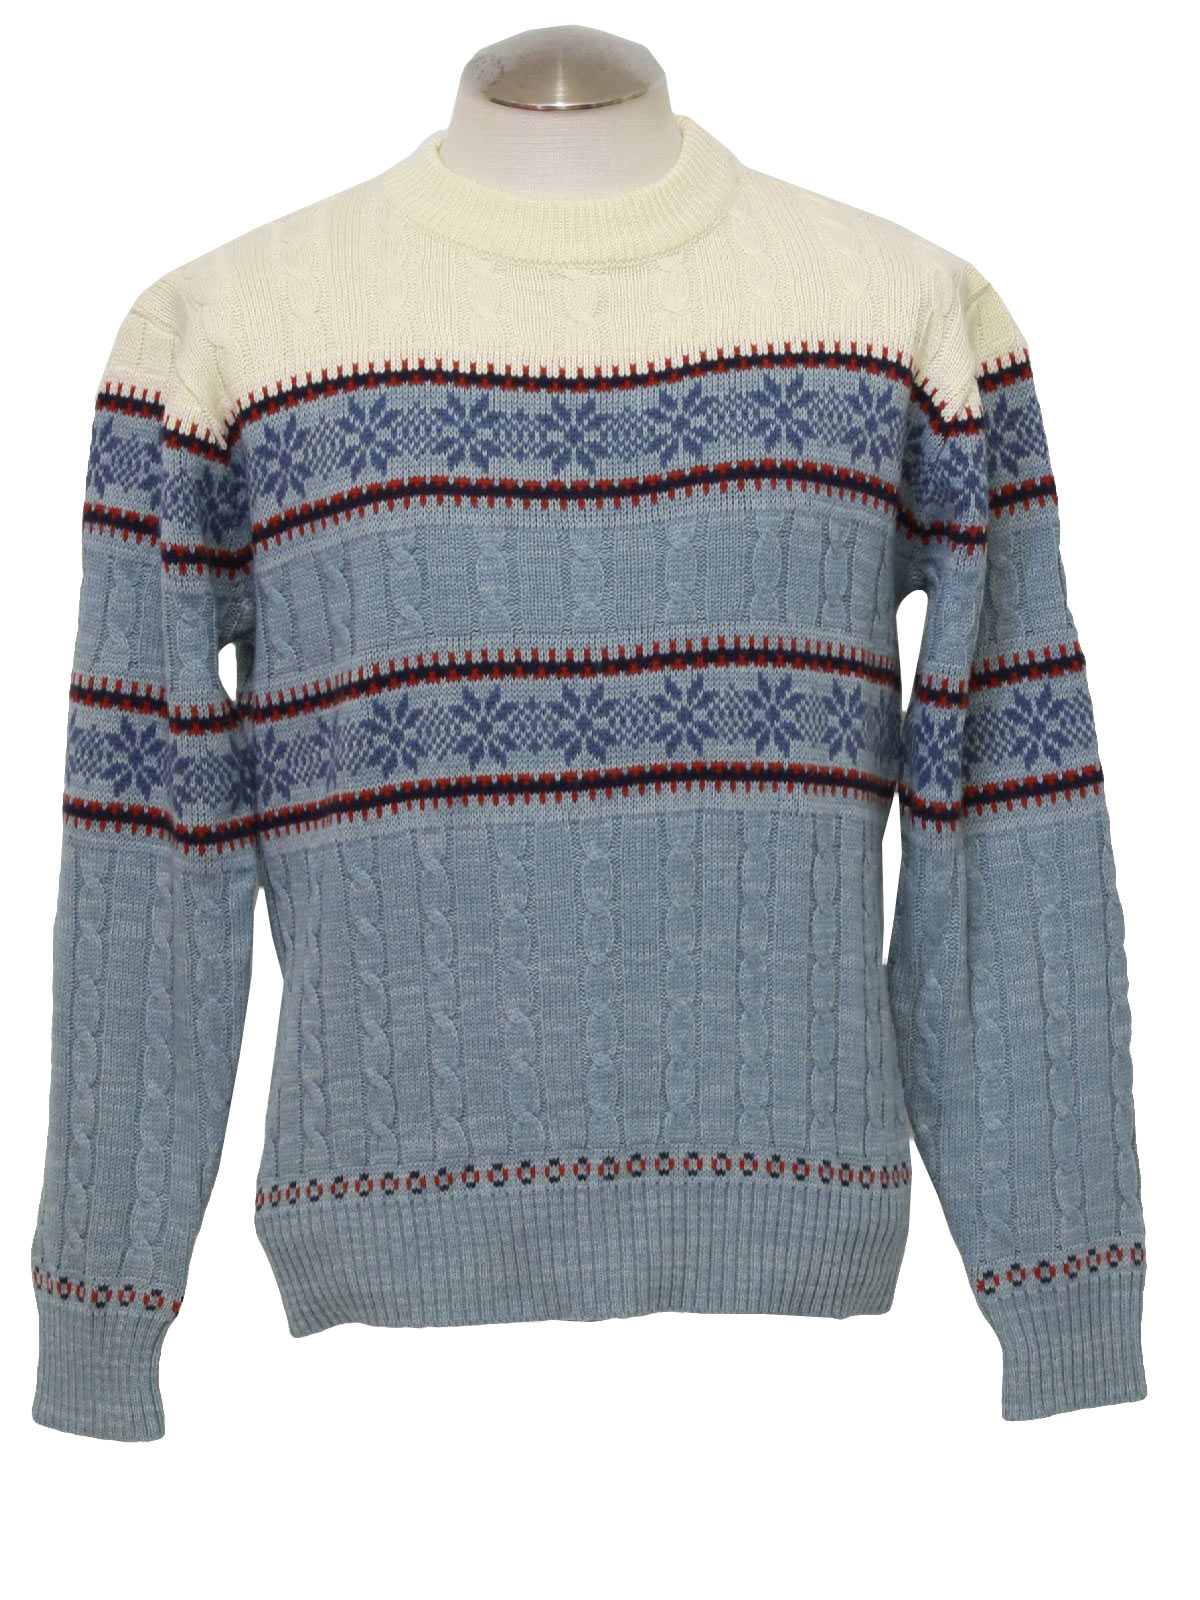 Retro 1980's Sweater (Trent) : Early 80s -Trent- Mens off white, light ...